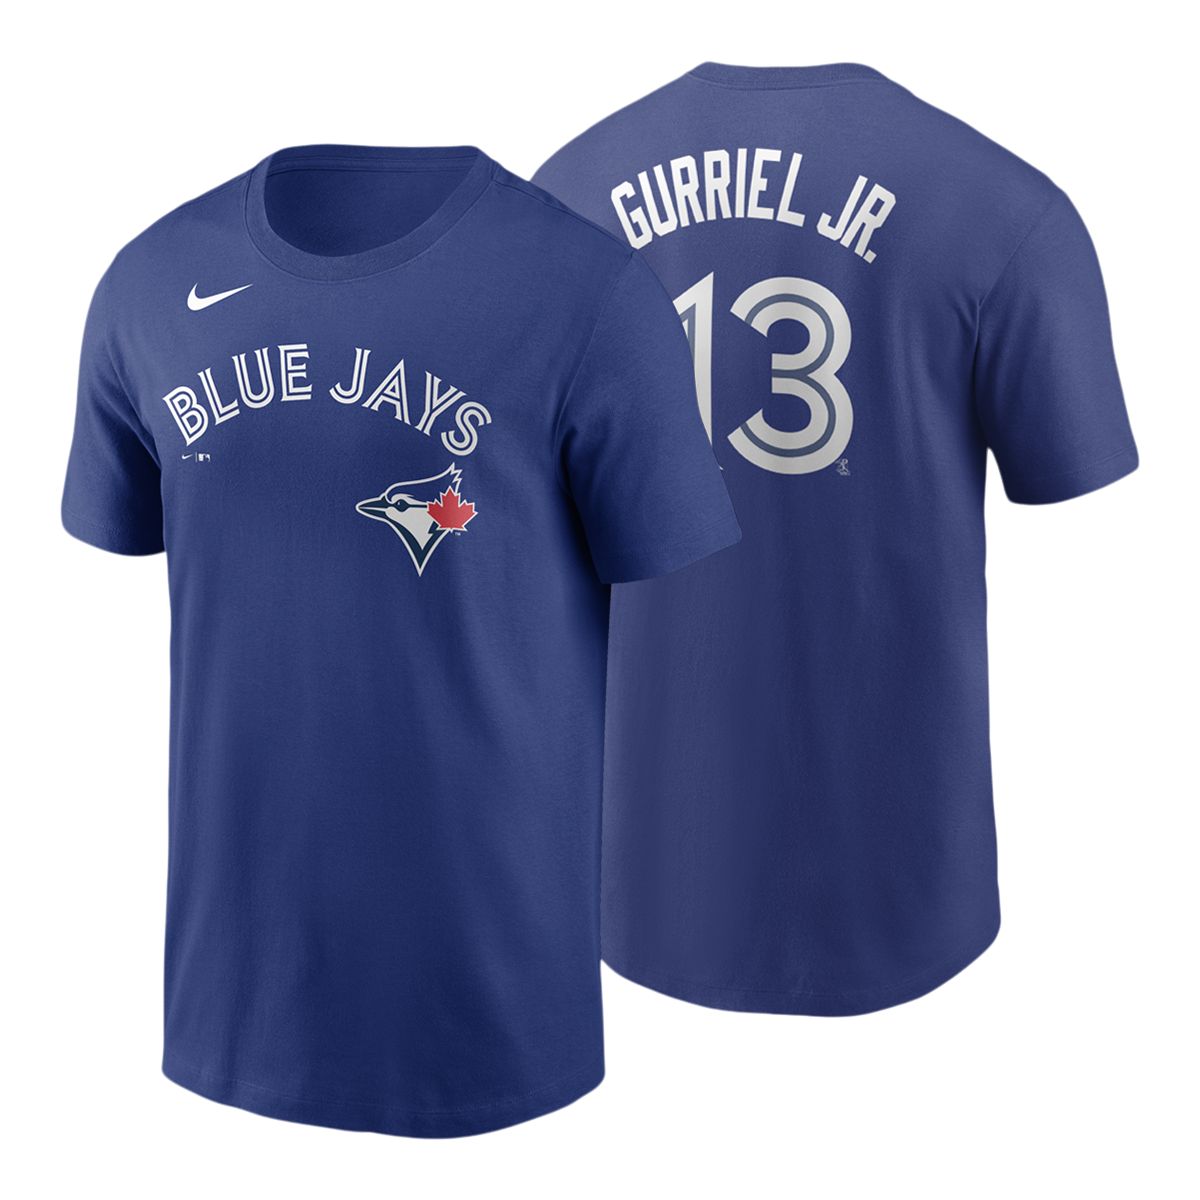 Toronto Blue Jays Merchandise, Jerseys, Apparel, Clothing